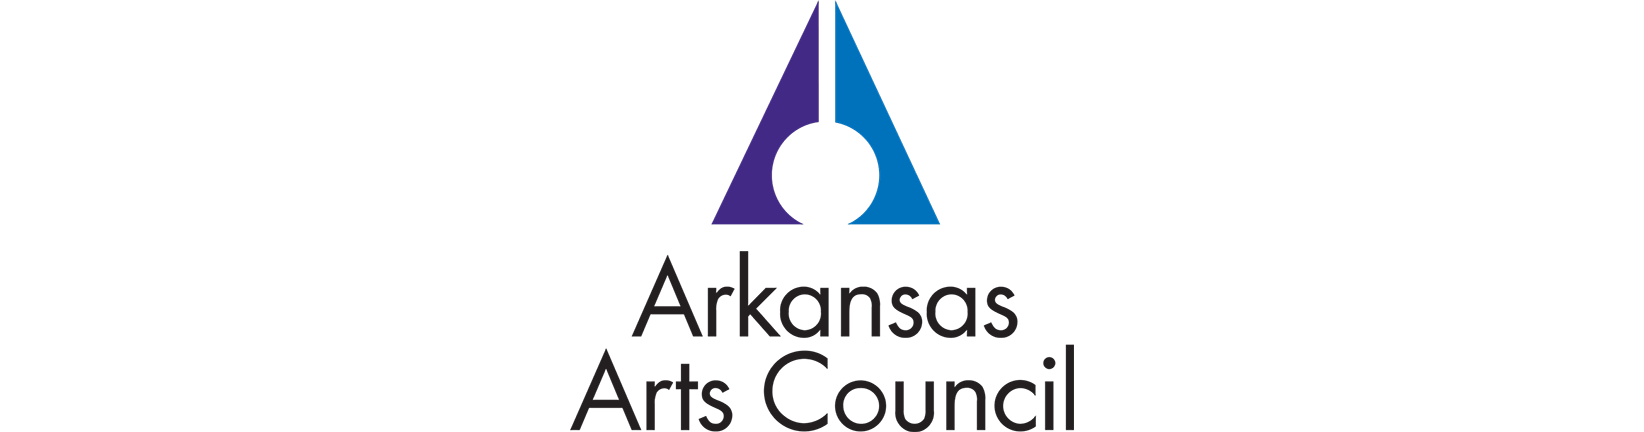 Arkansas Art Council - Ballet Patrons